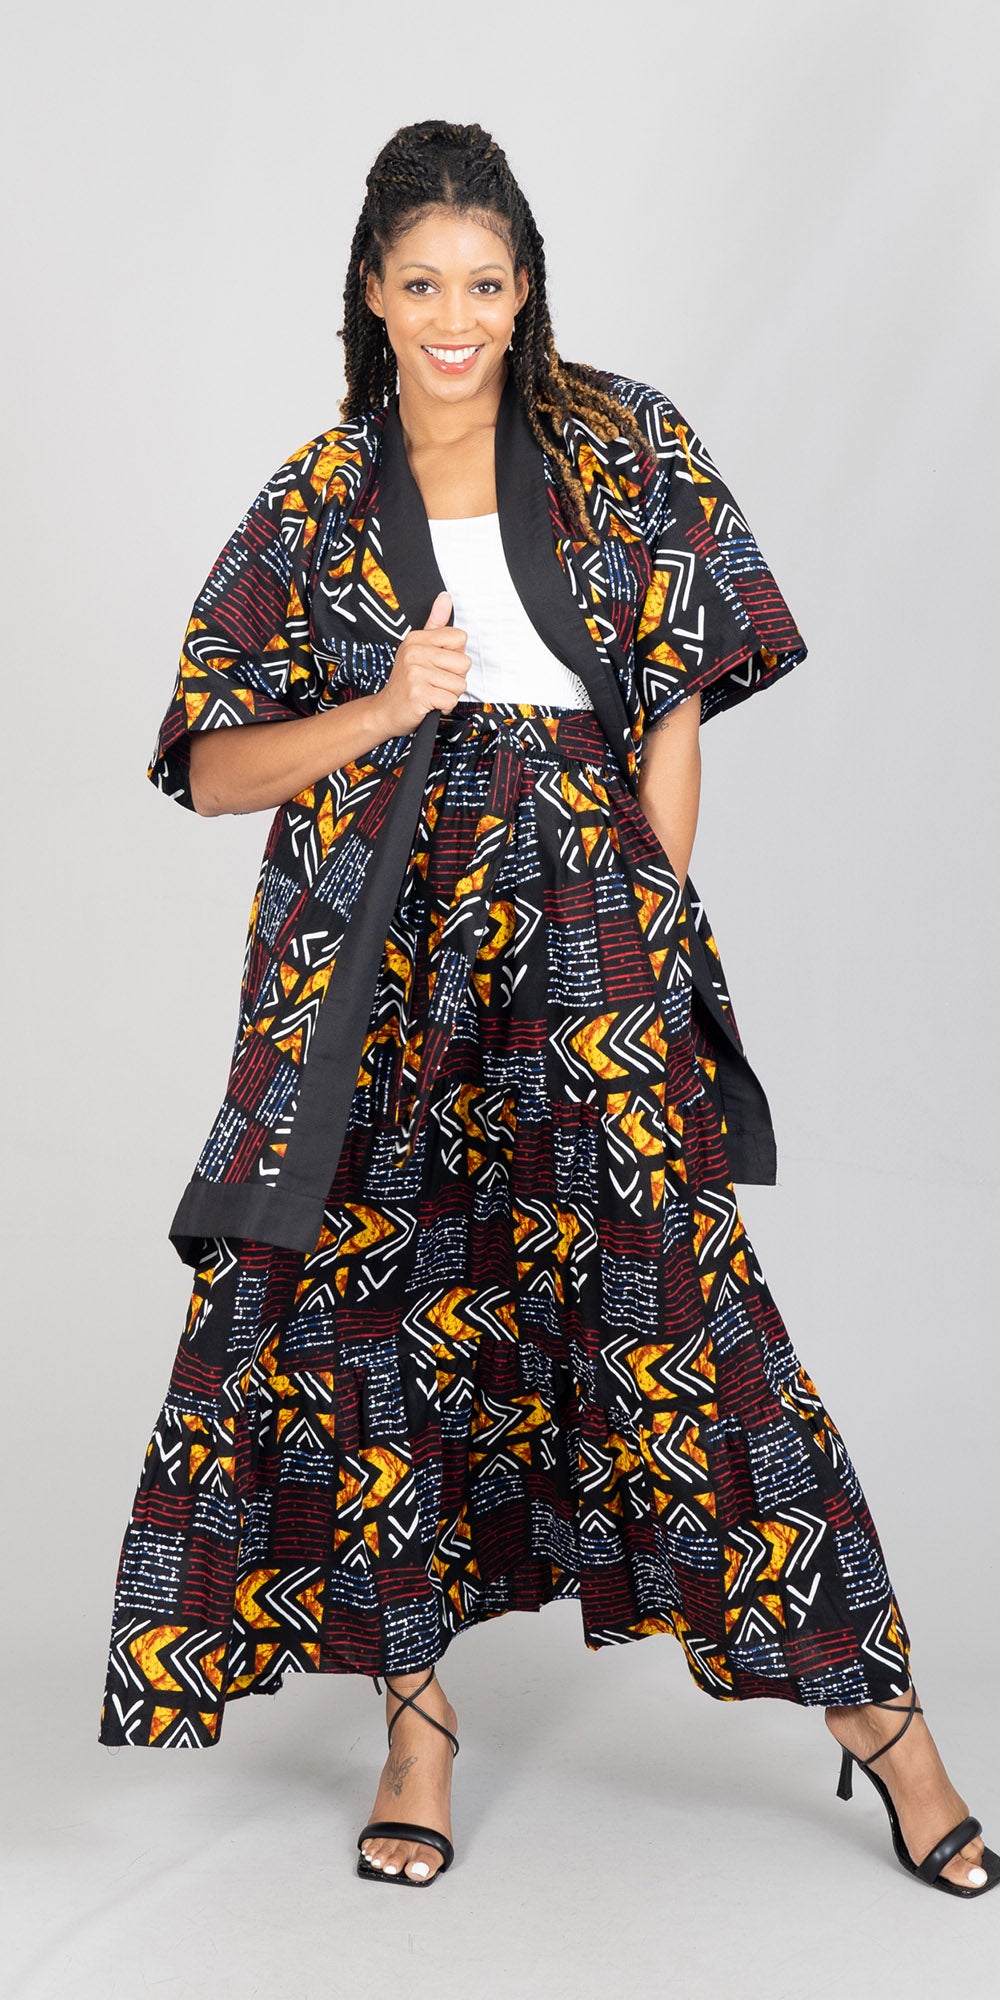 KaraChic 7786-601 - African Print Belted Kimono Jacket